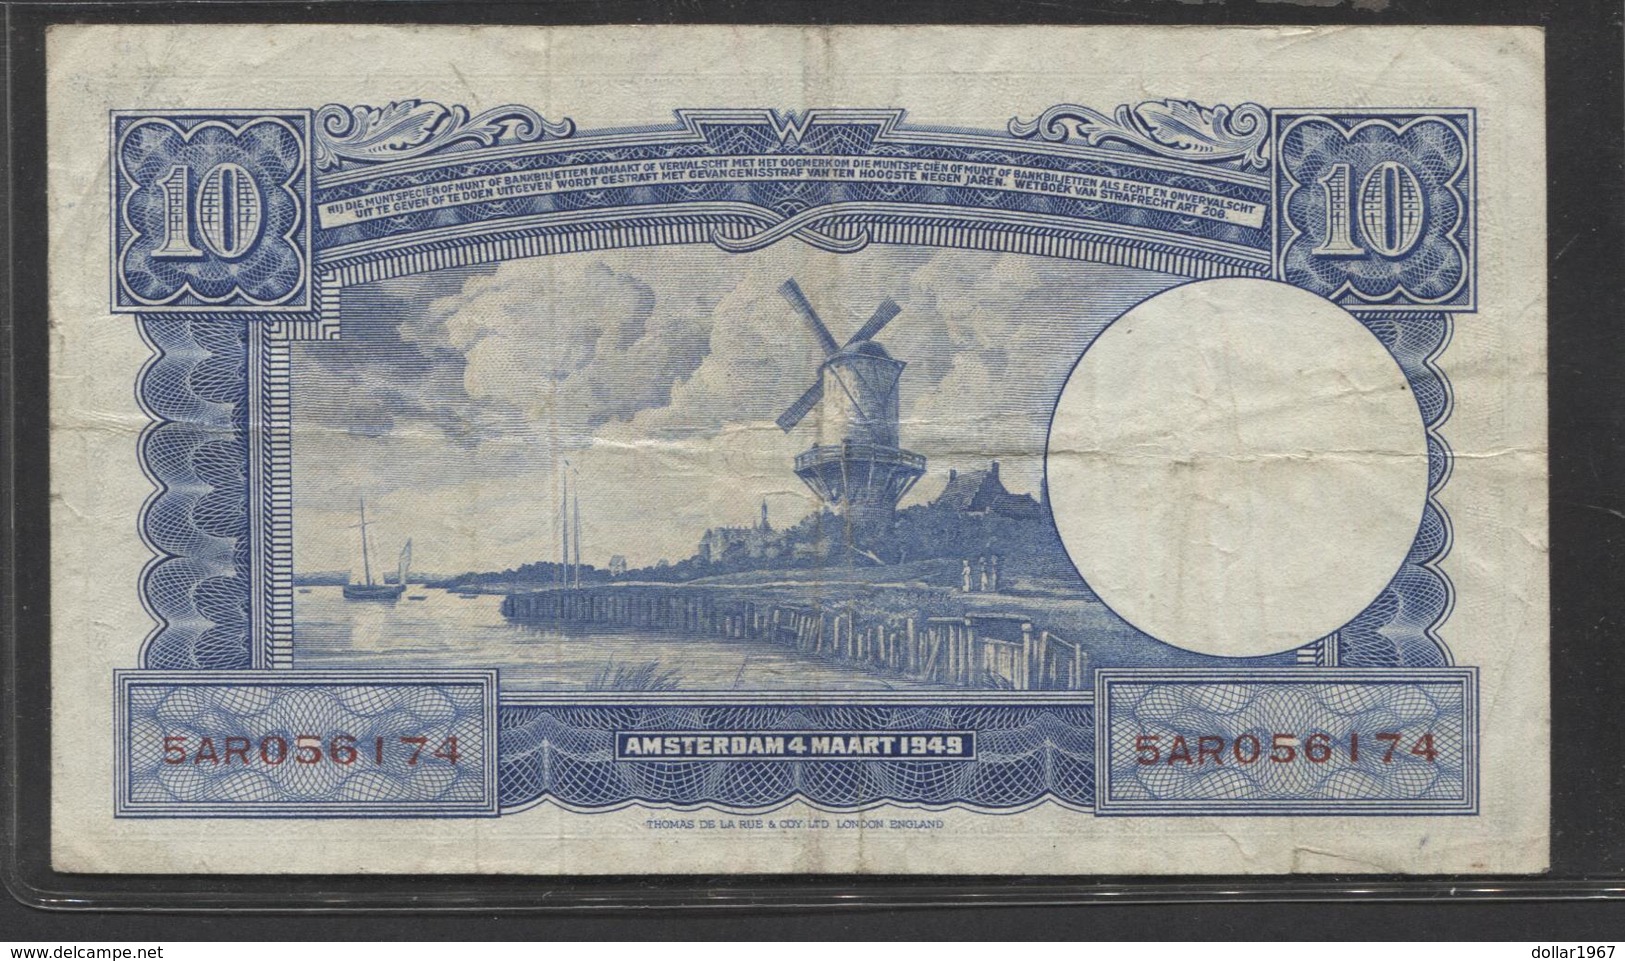 Netherlands 10 Gulden 4-3-1949 , No 5 AR 056174,  - See The 2 Scans For Condition.(Originalscan ) - 10 Florín Holandés (gulden)